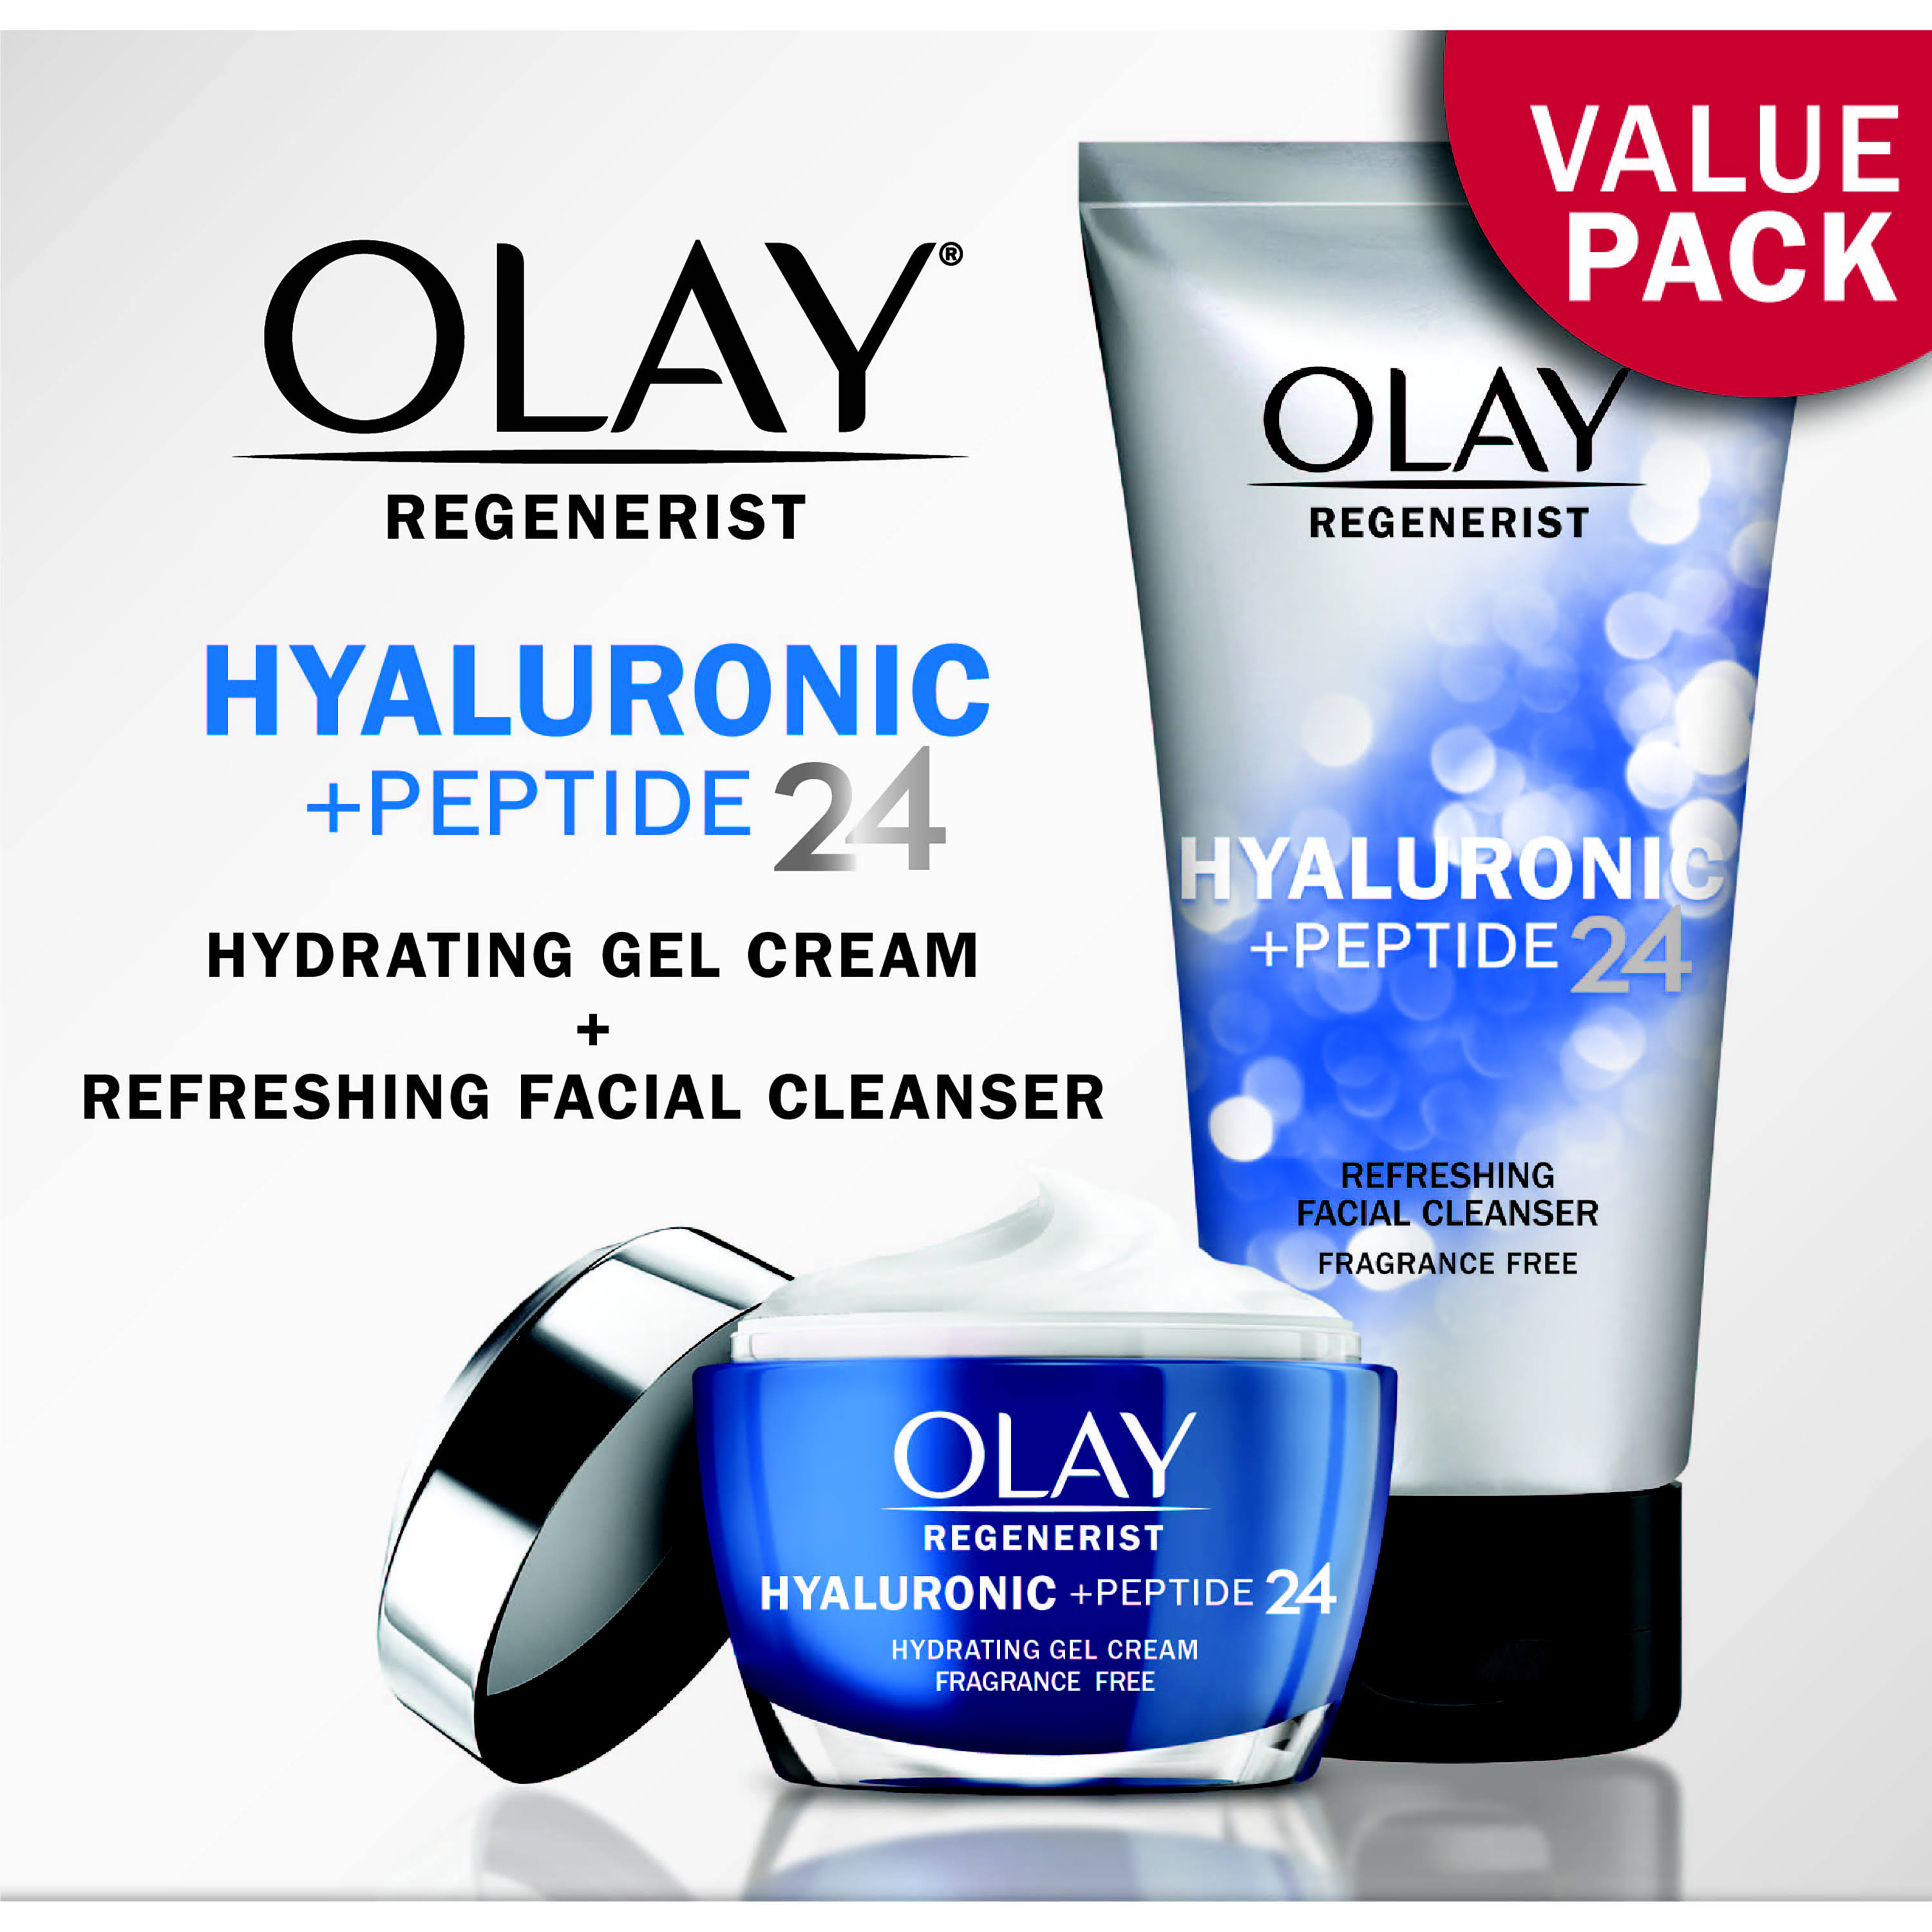 Olay Regenerist Hyaluronic + Peptide 24 Duo Pack, Face Wash & Gel Face Moisturizer - 1 oz